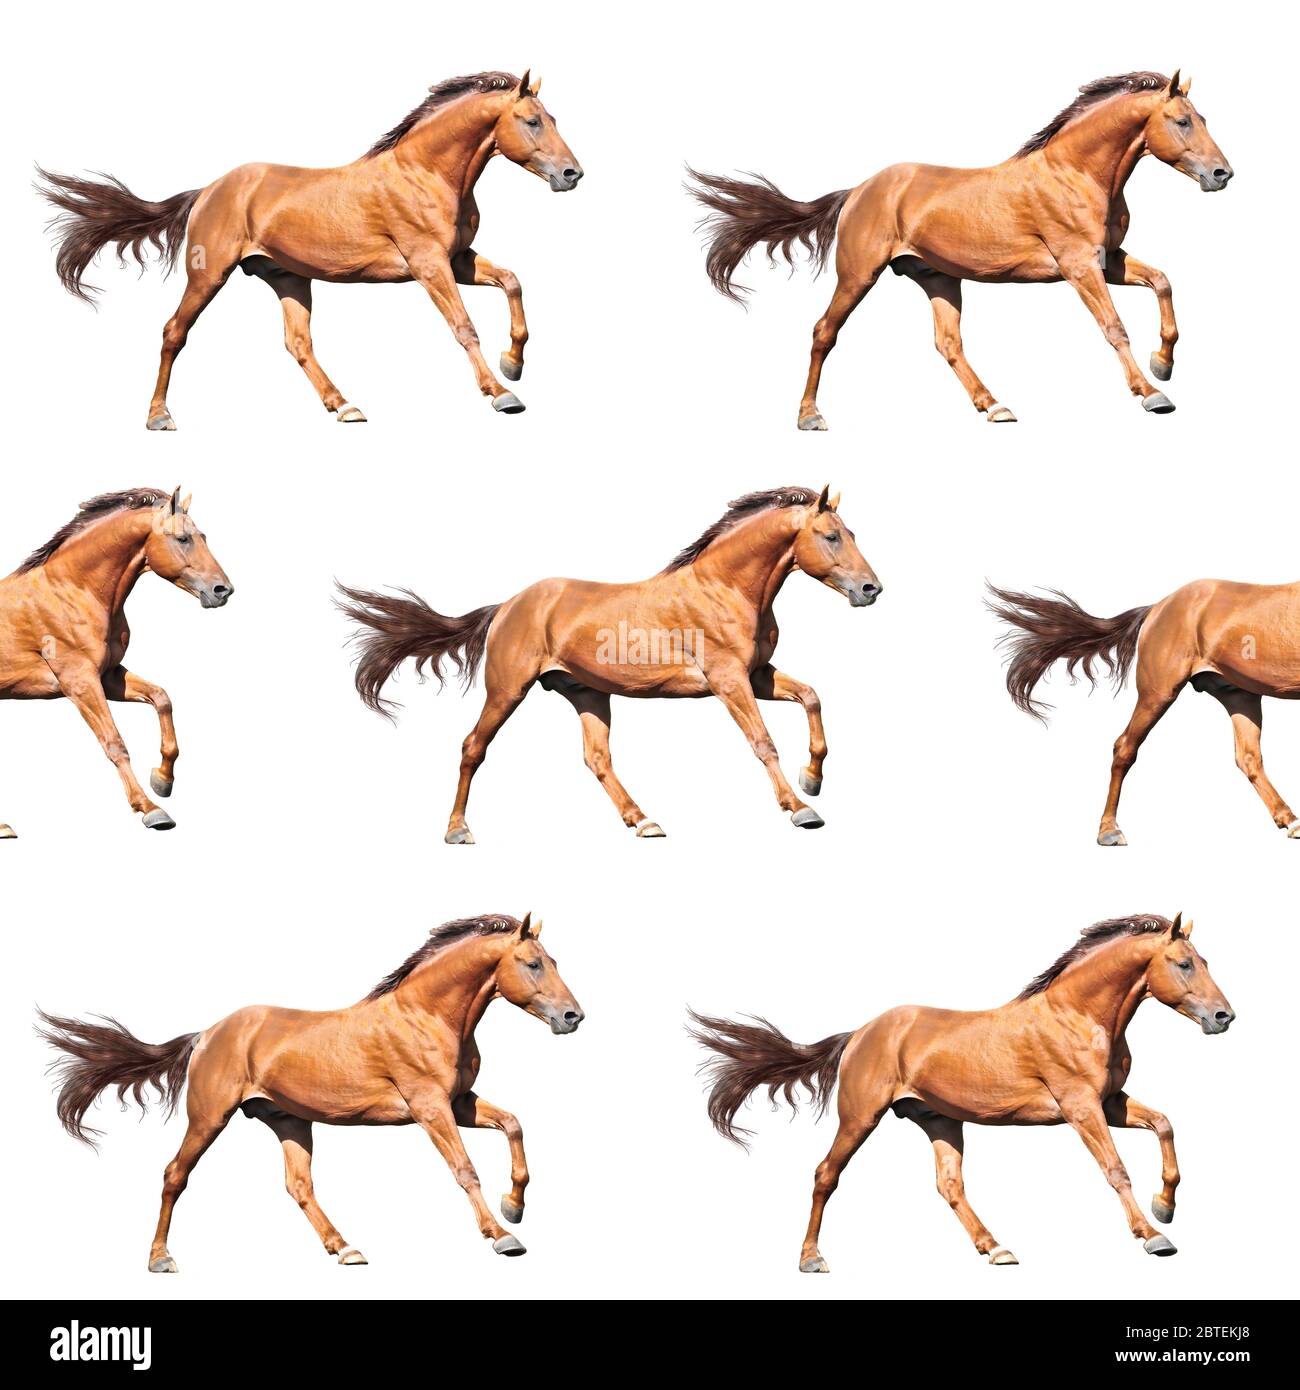 Seamless pattern photo red galloped horse creative illustration. Stock Photo